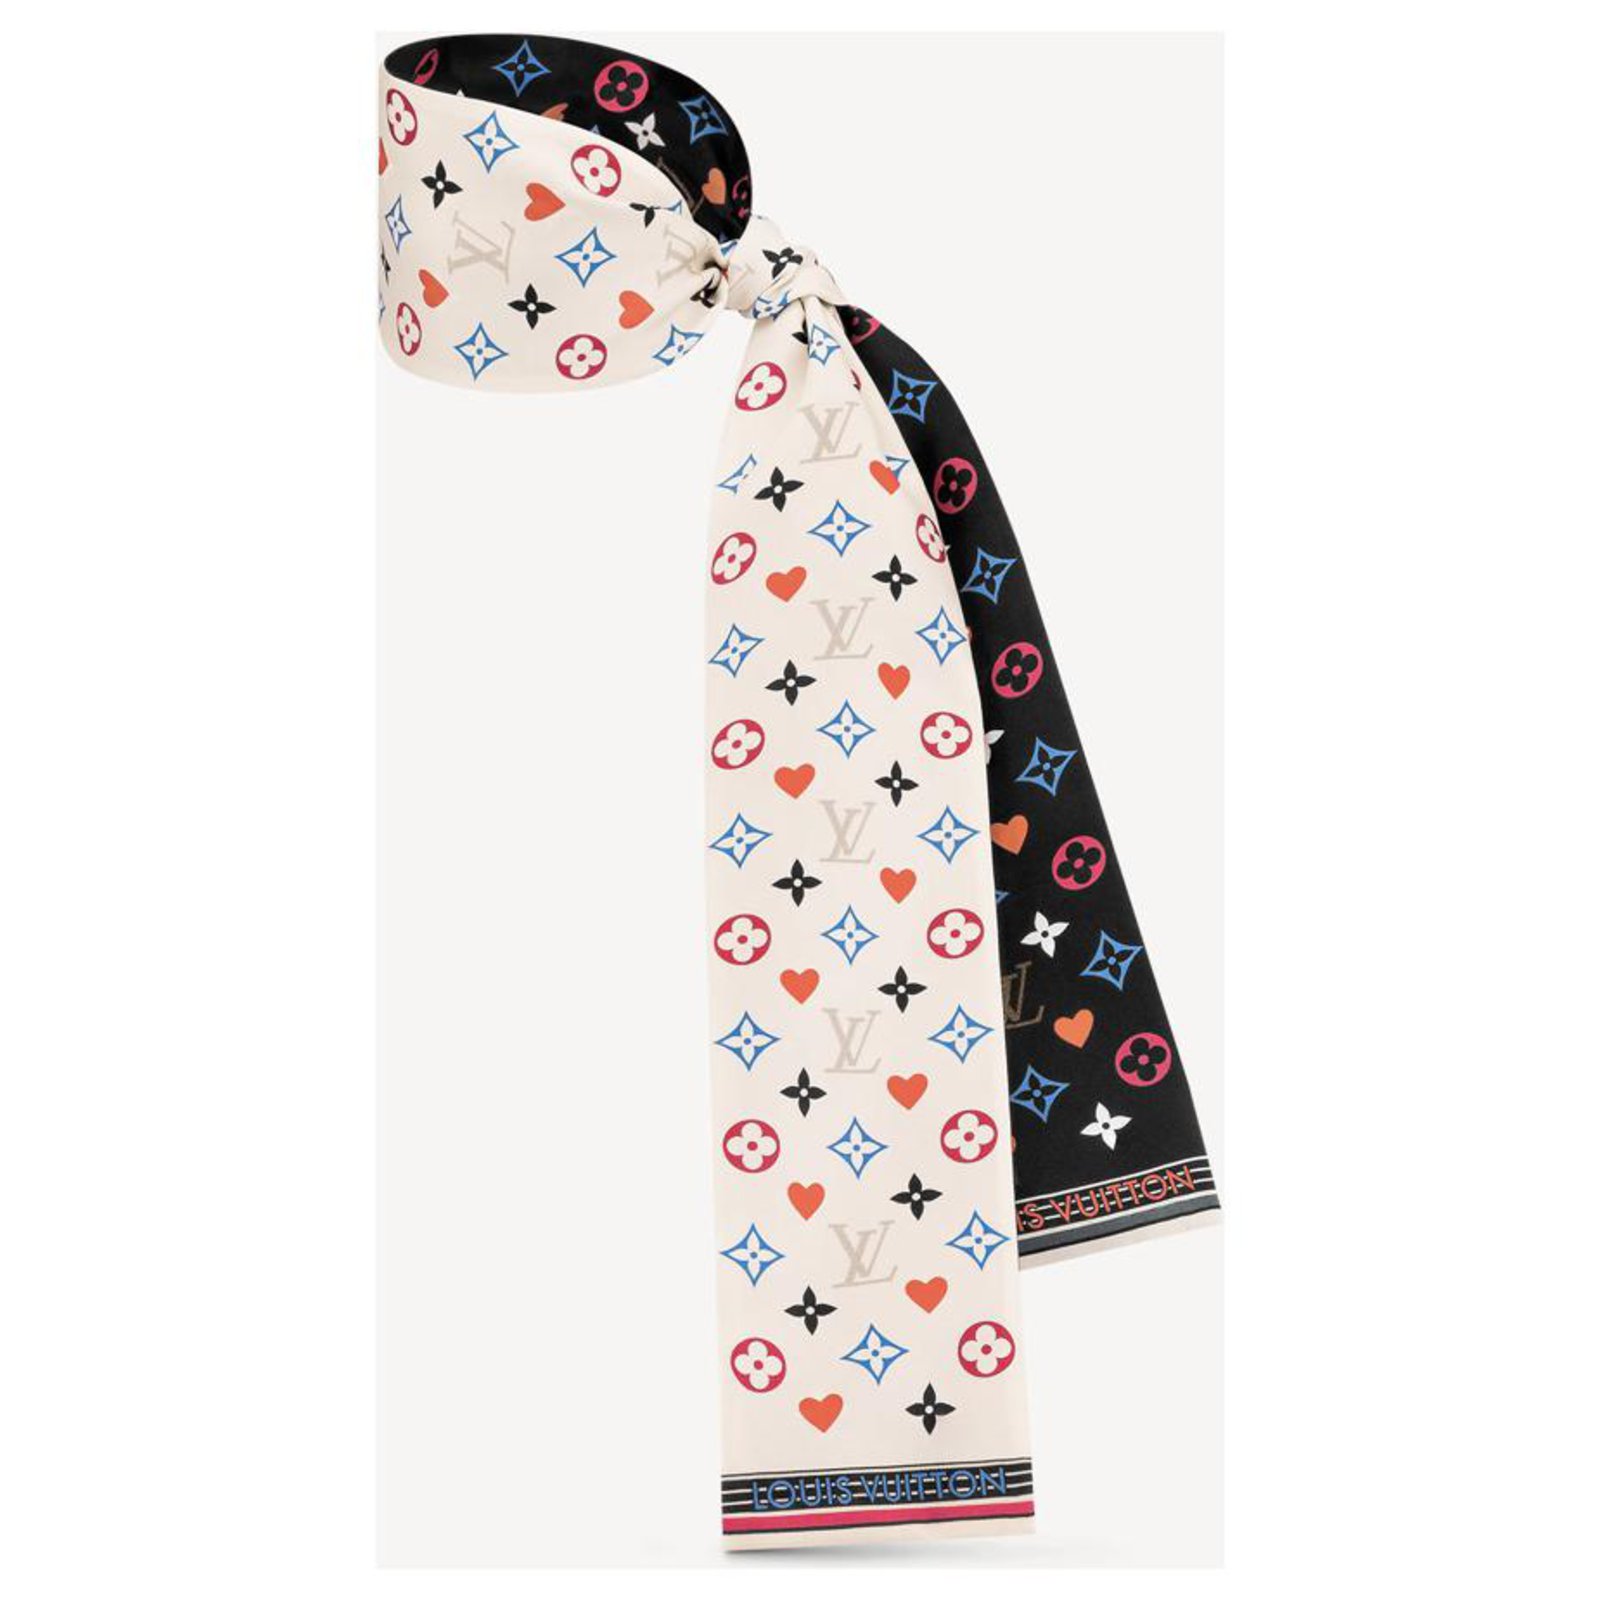 NWT Louis Vuitton Game On Card Pocket Silk Pajamas Top C2021 36 4